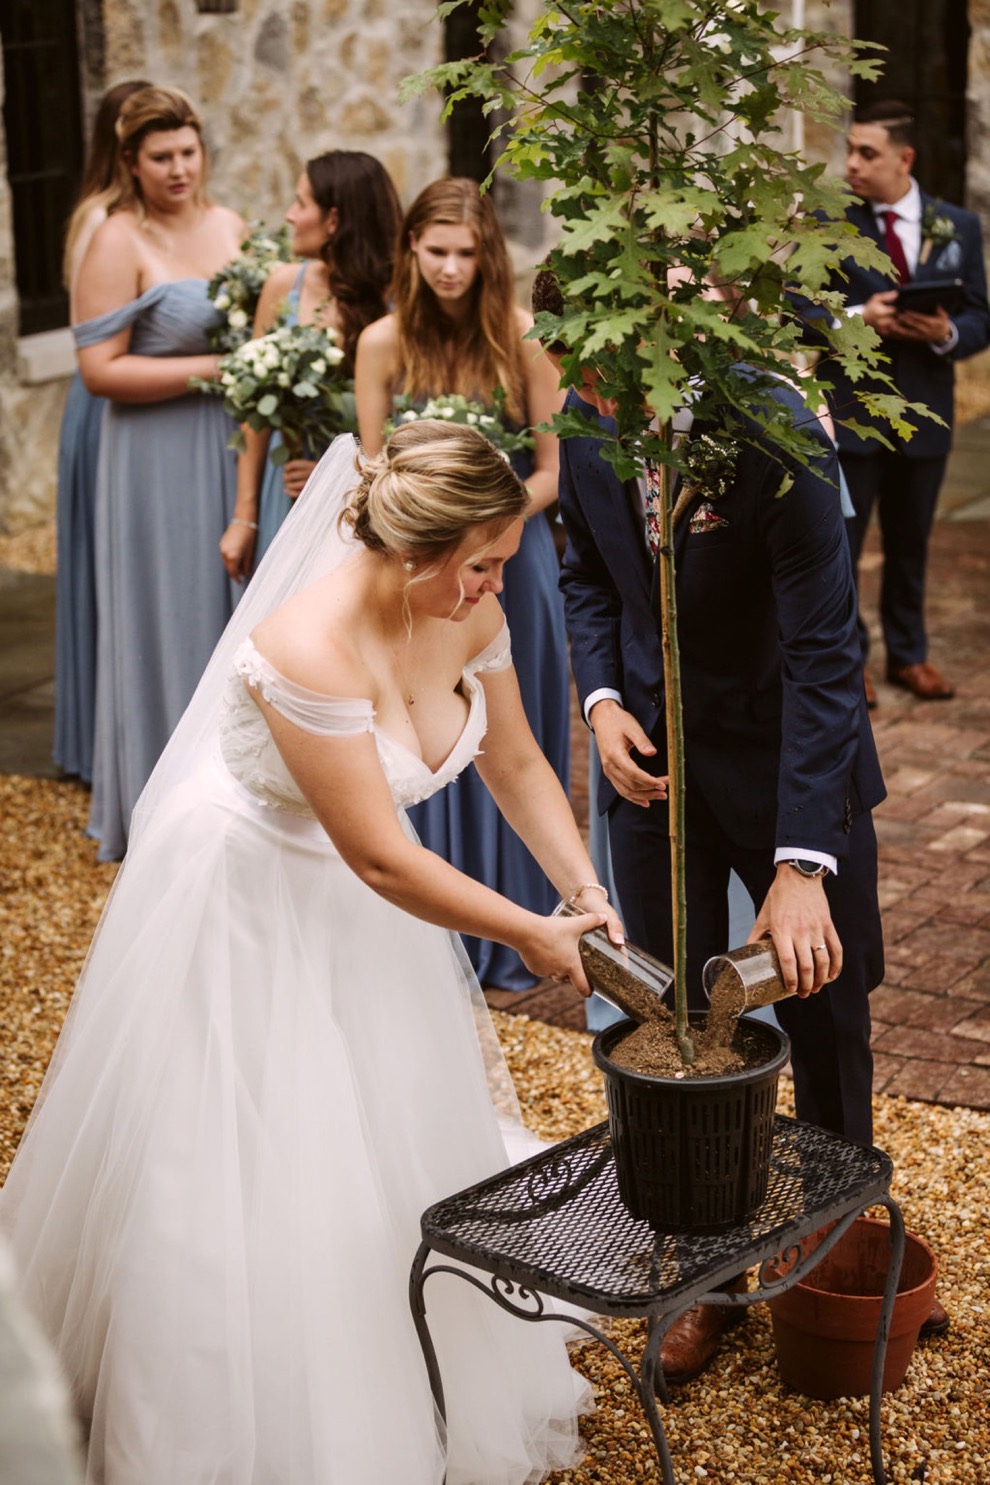 bride and groom adding dirt to an oak sapling during their backyard wedding